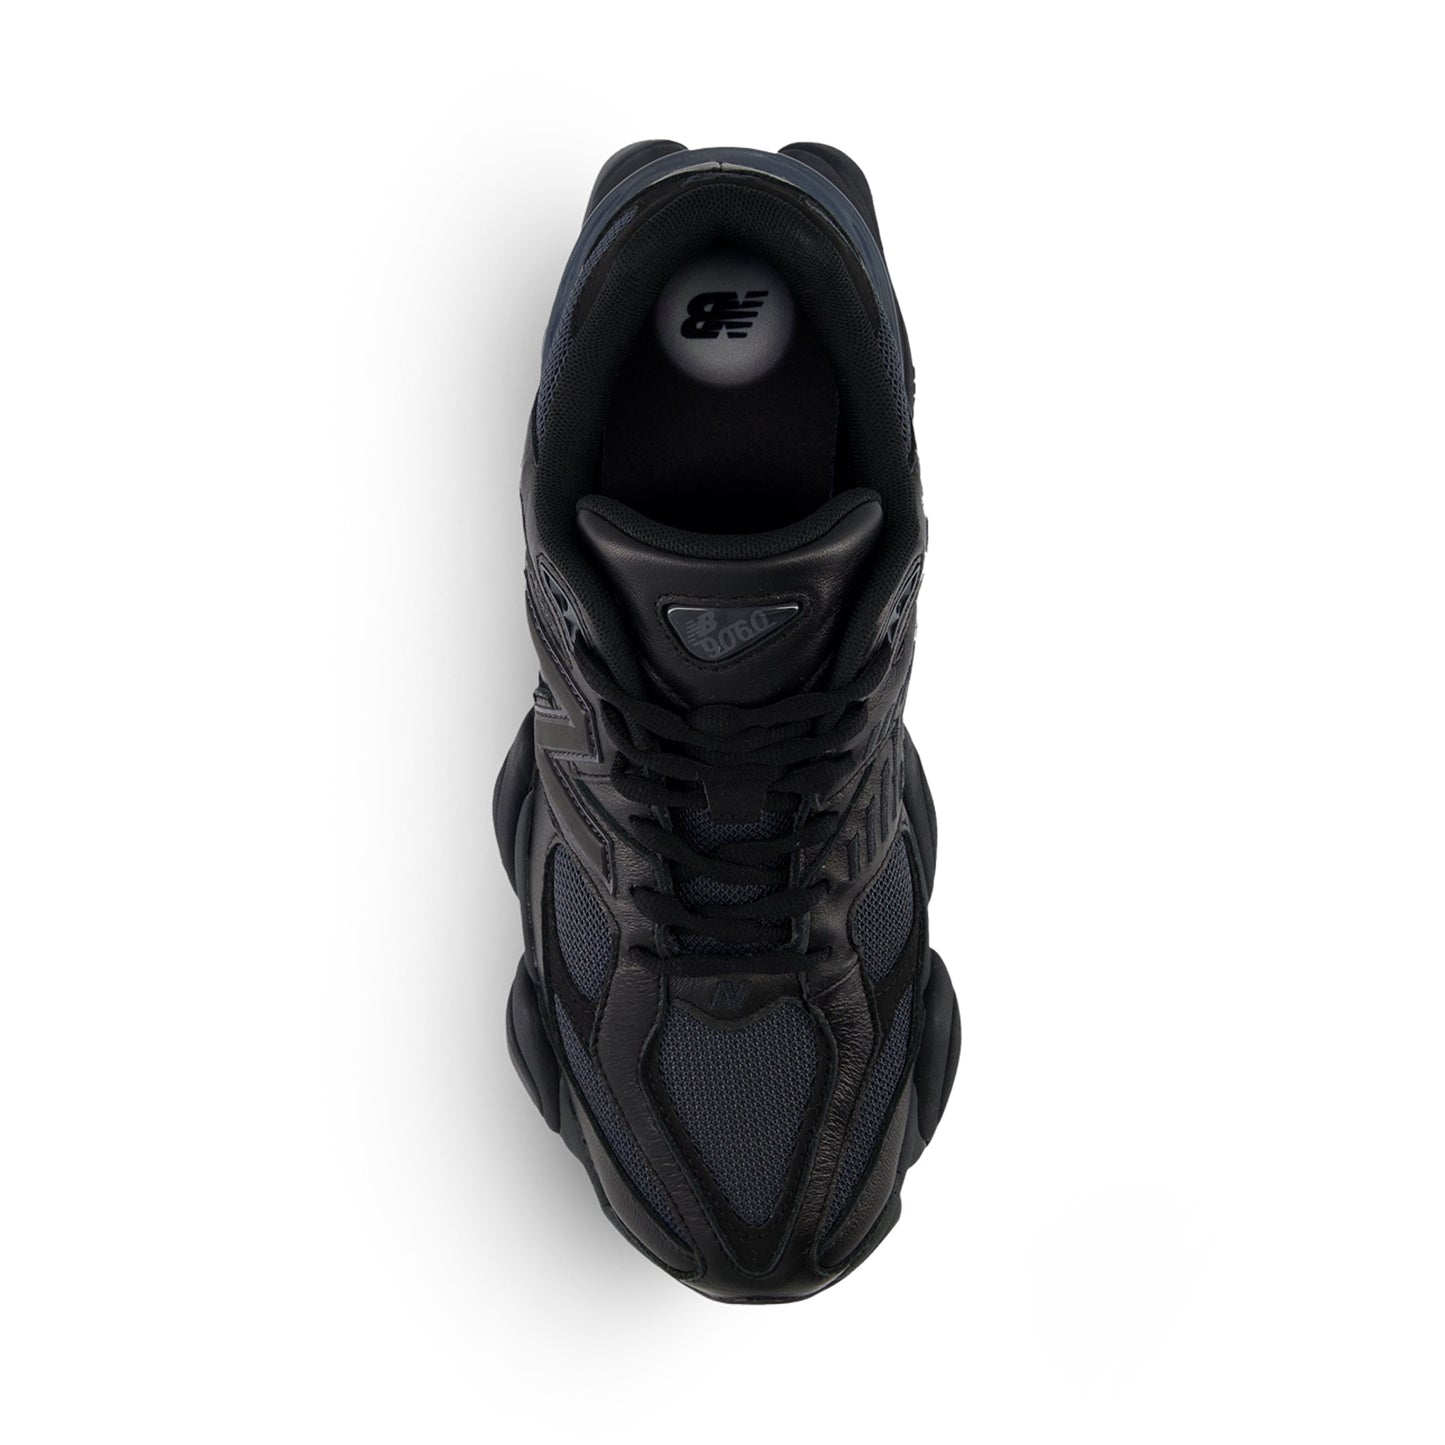 New Balance 9060 Triple Black Sneakers